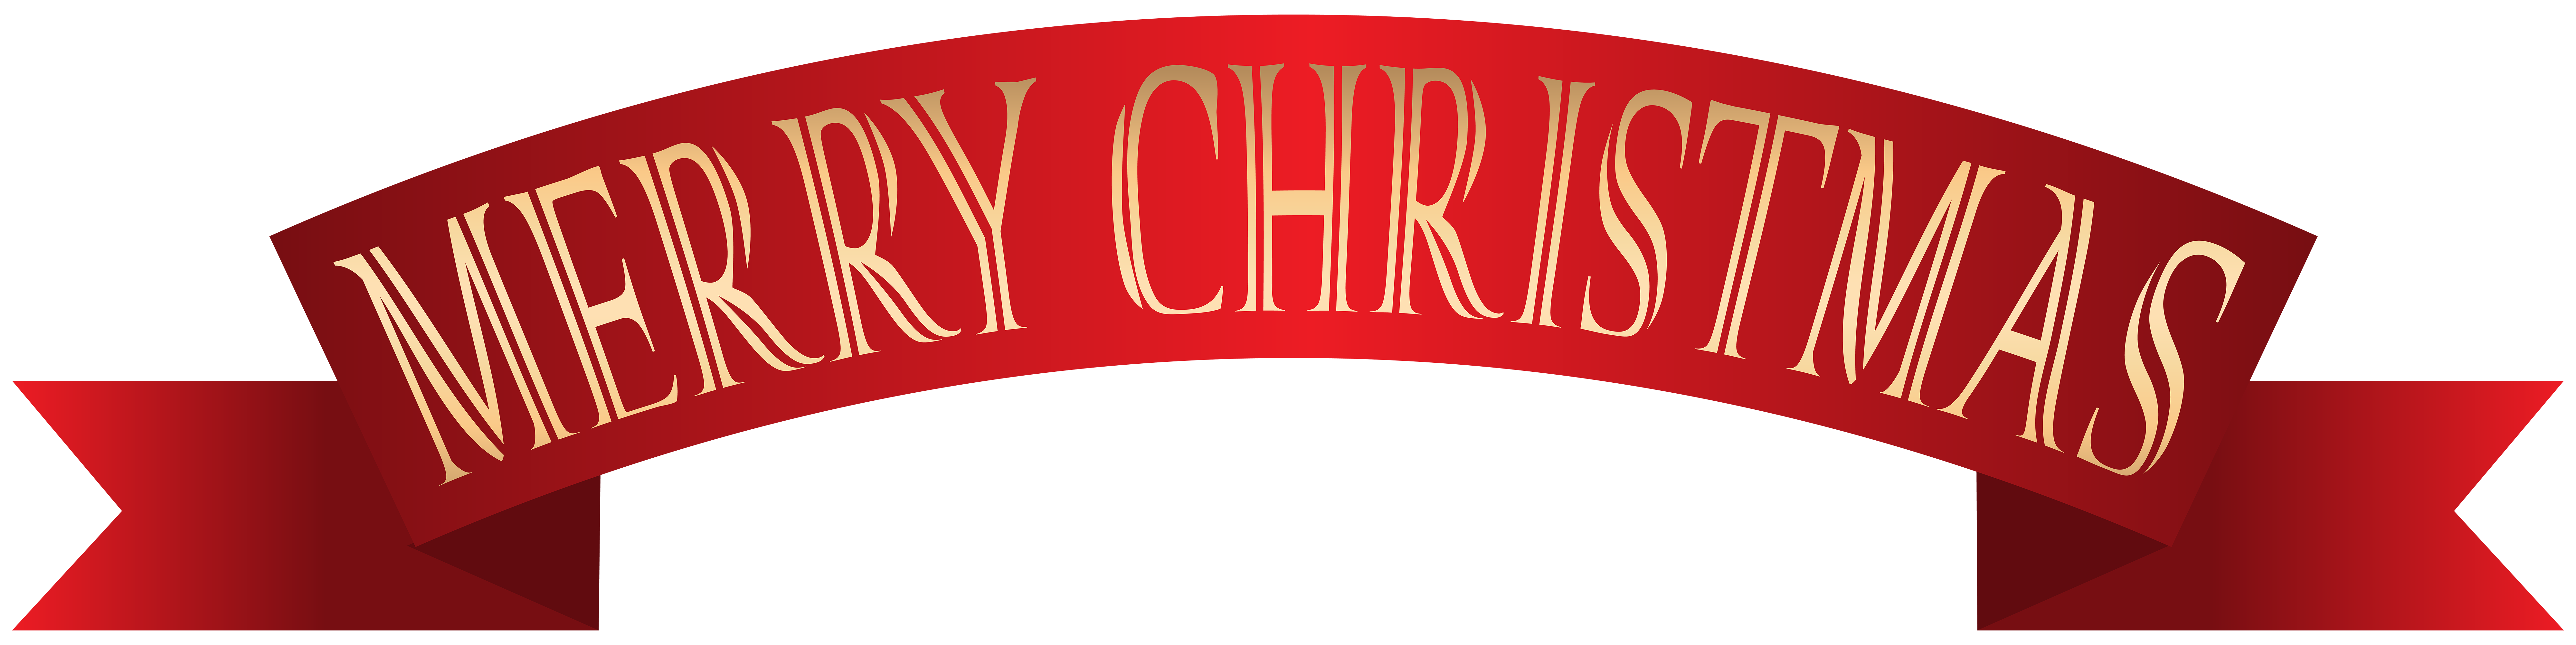 Merry Christmas Banner Image